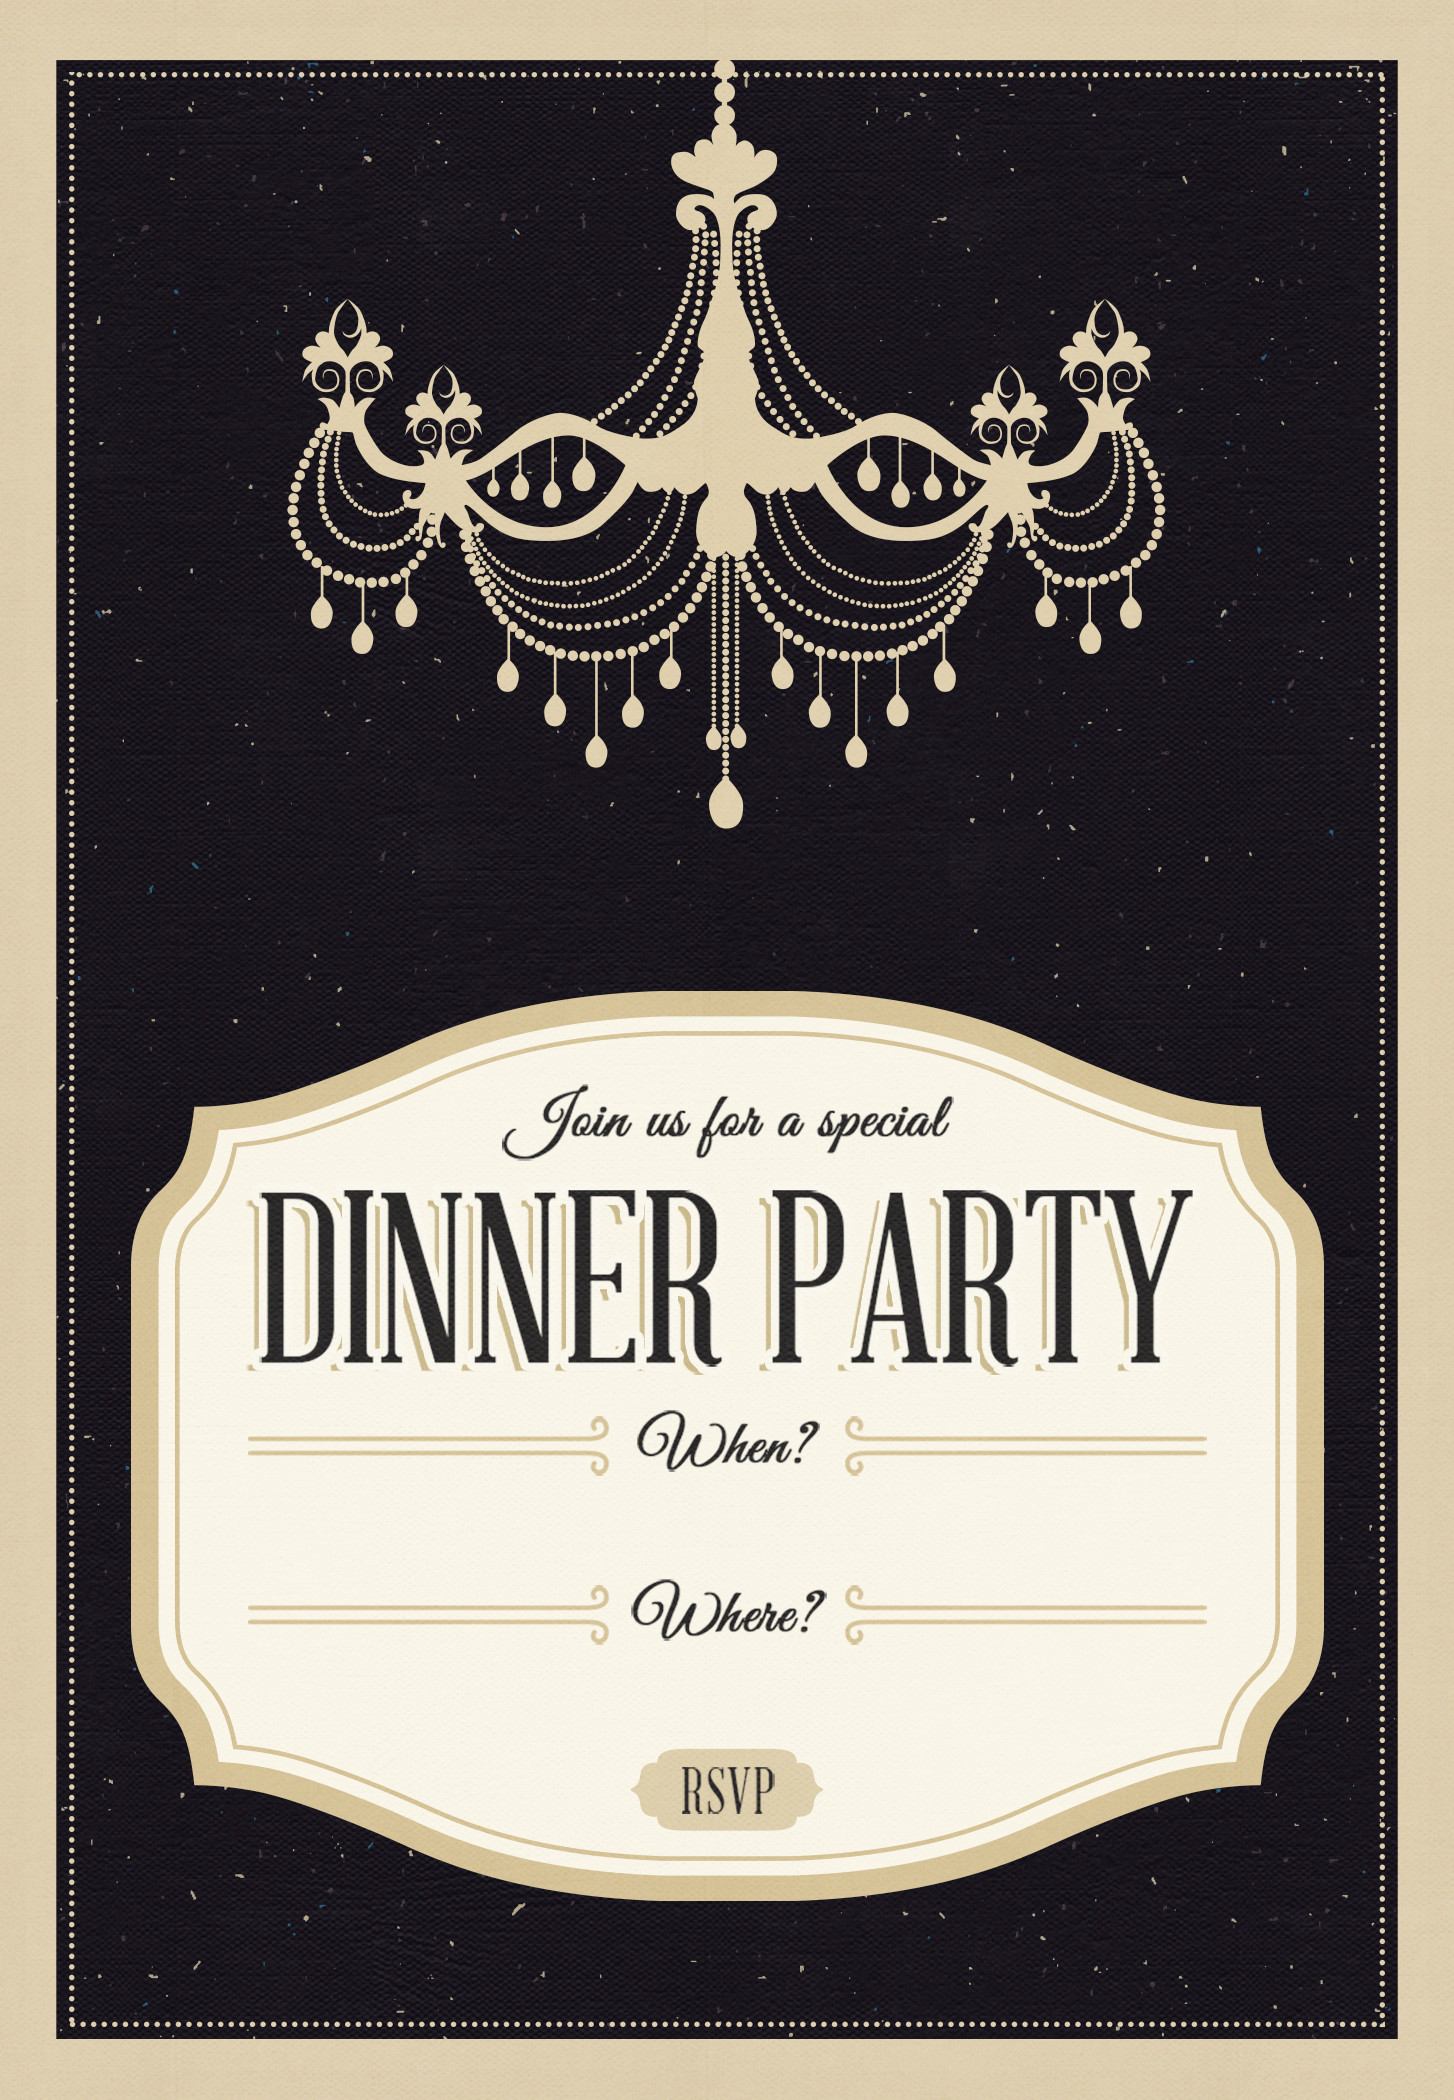 Dinner Party Invitation Ideas
 Classy Chandelier Free Printable Dinner Party Invitation